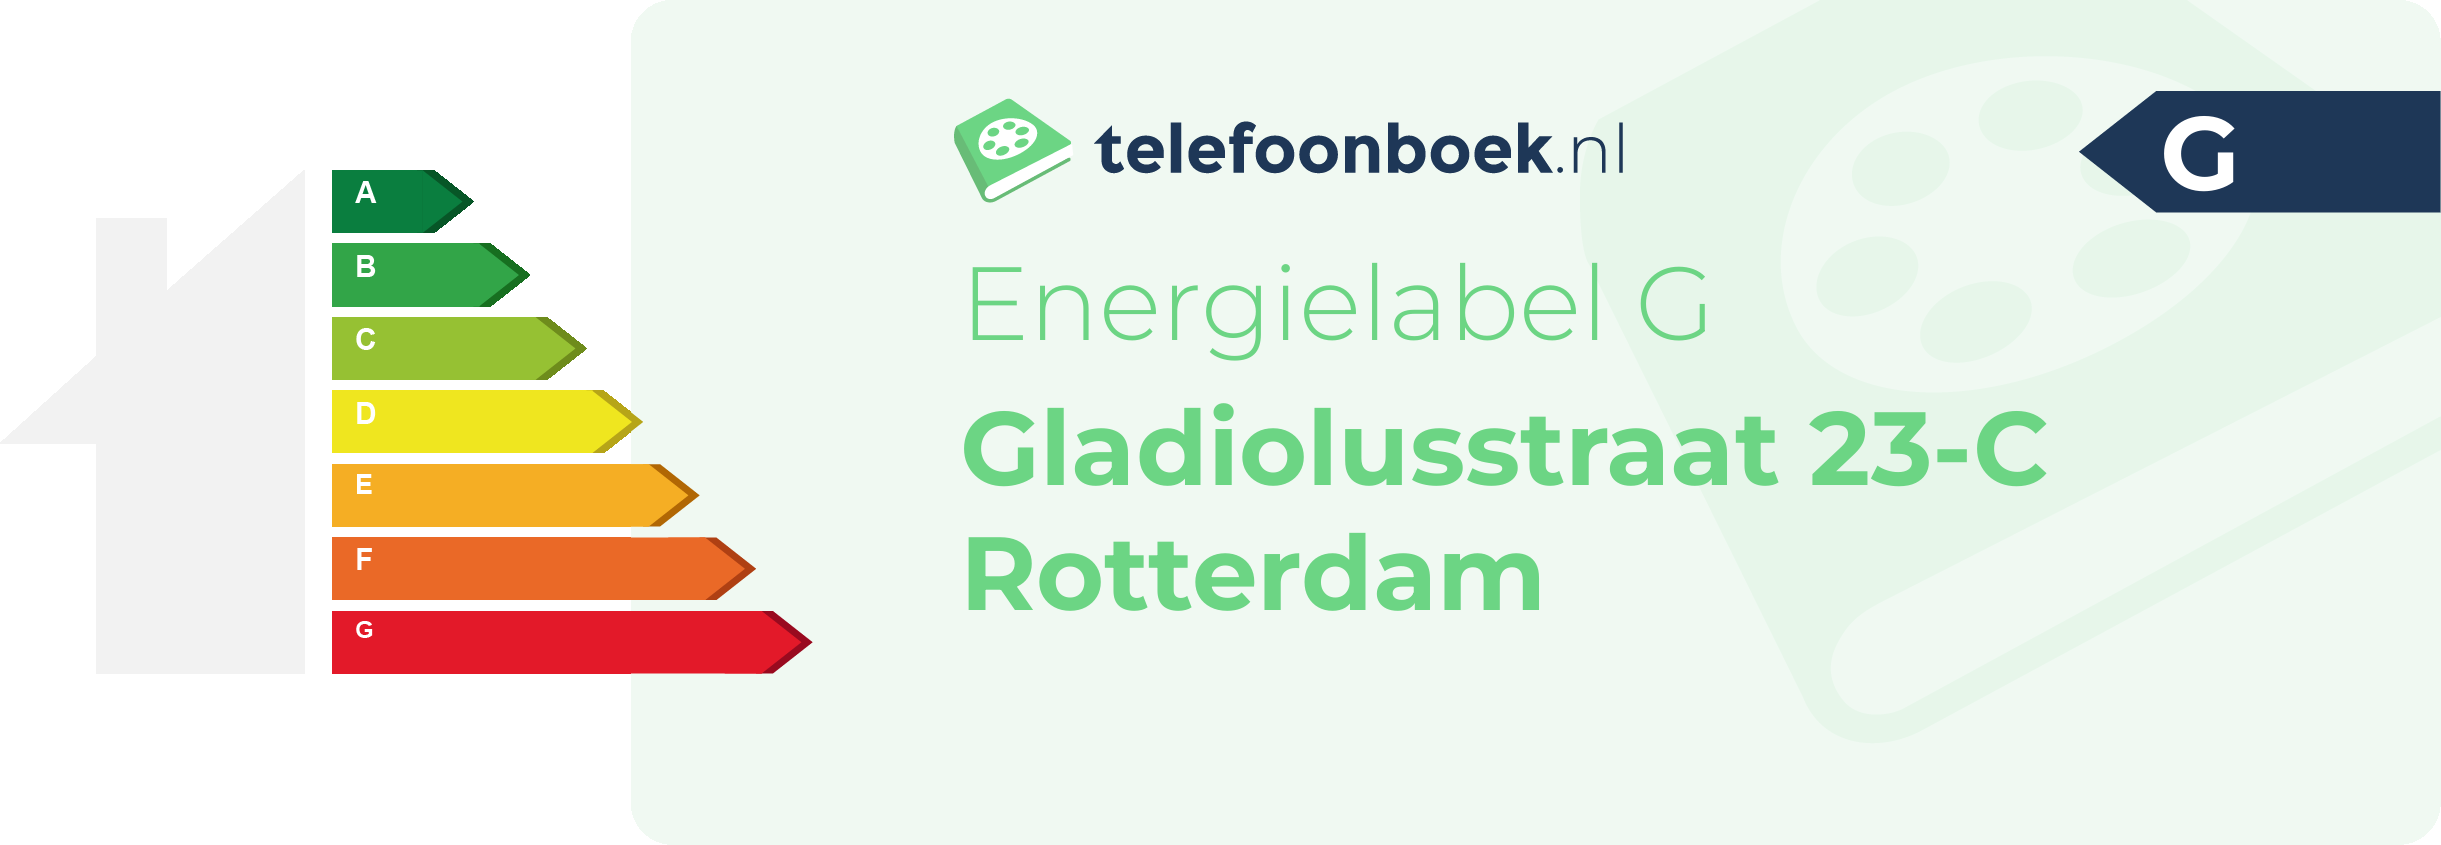 Energielabel Gladiolusstraat 23-C Rotterdam